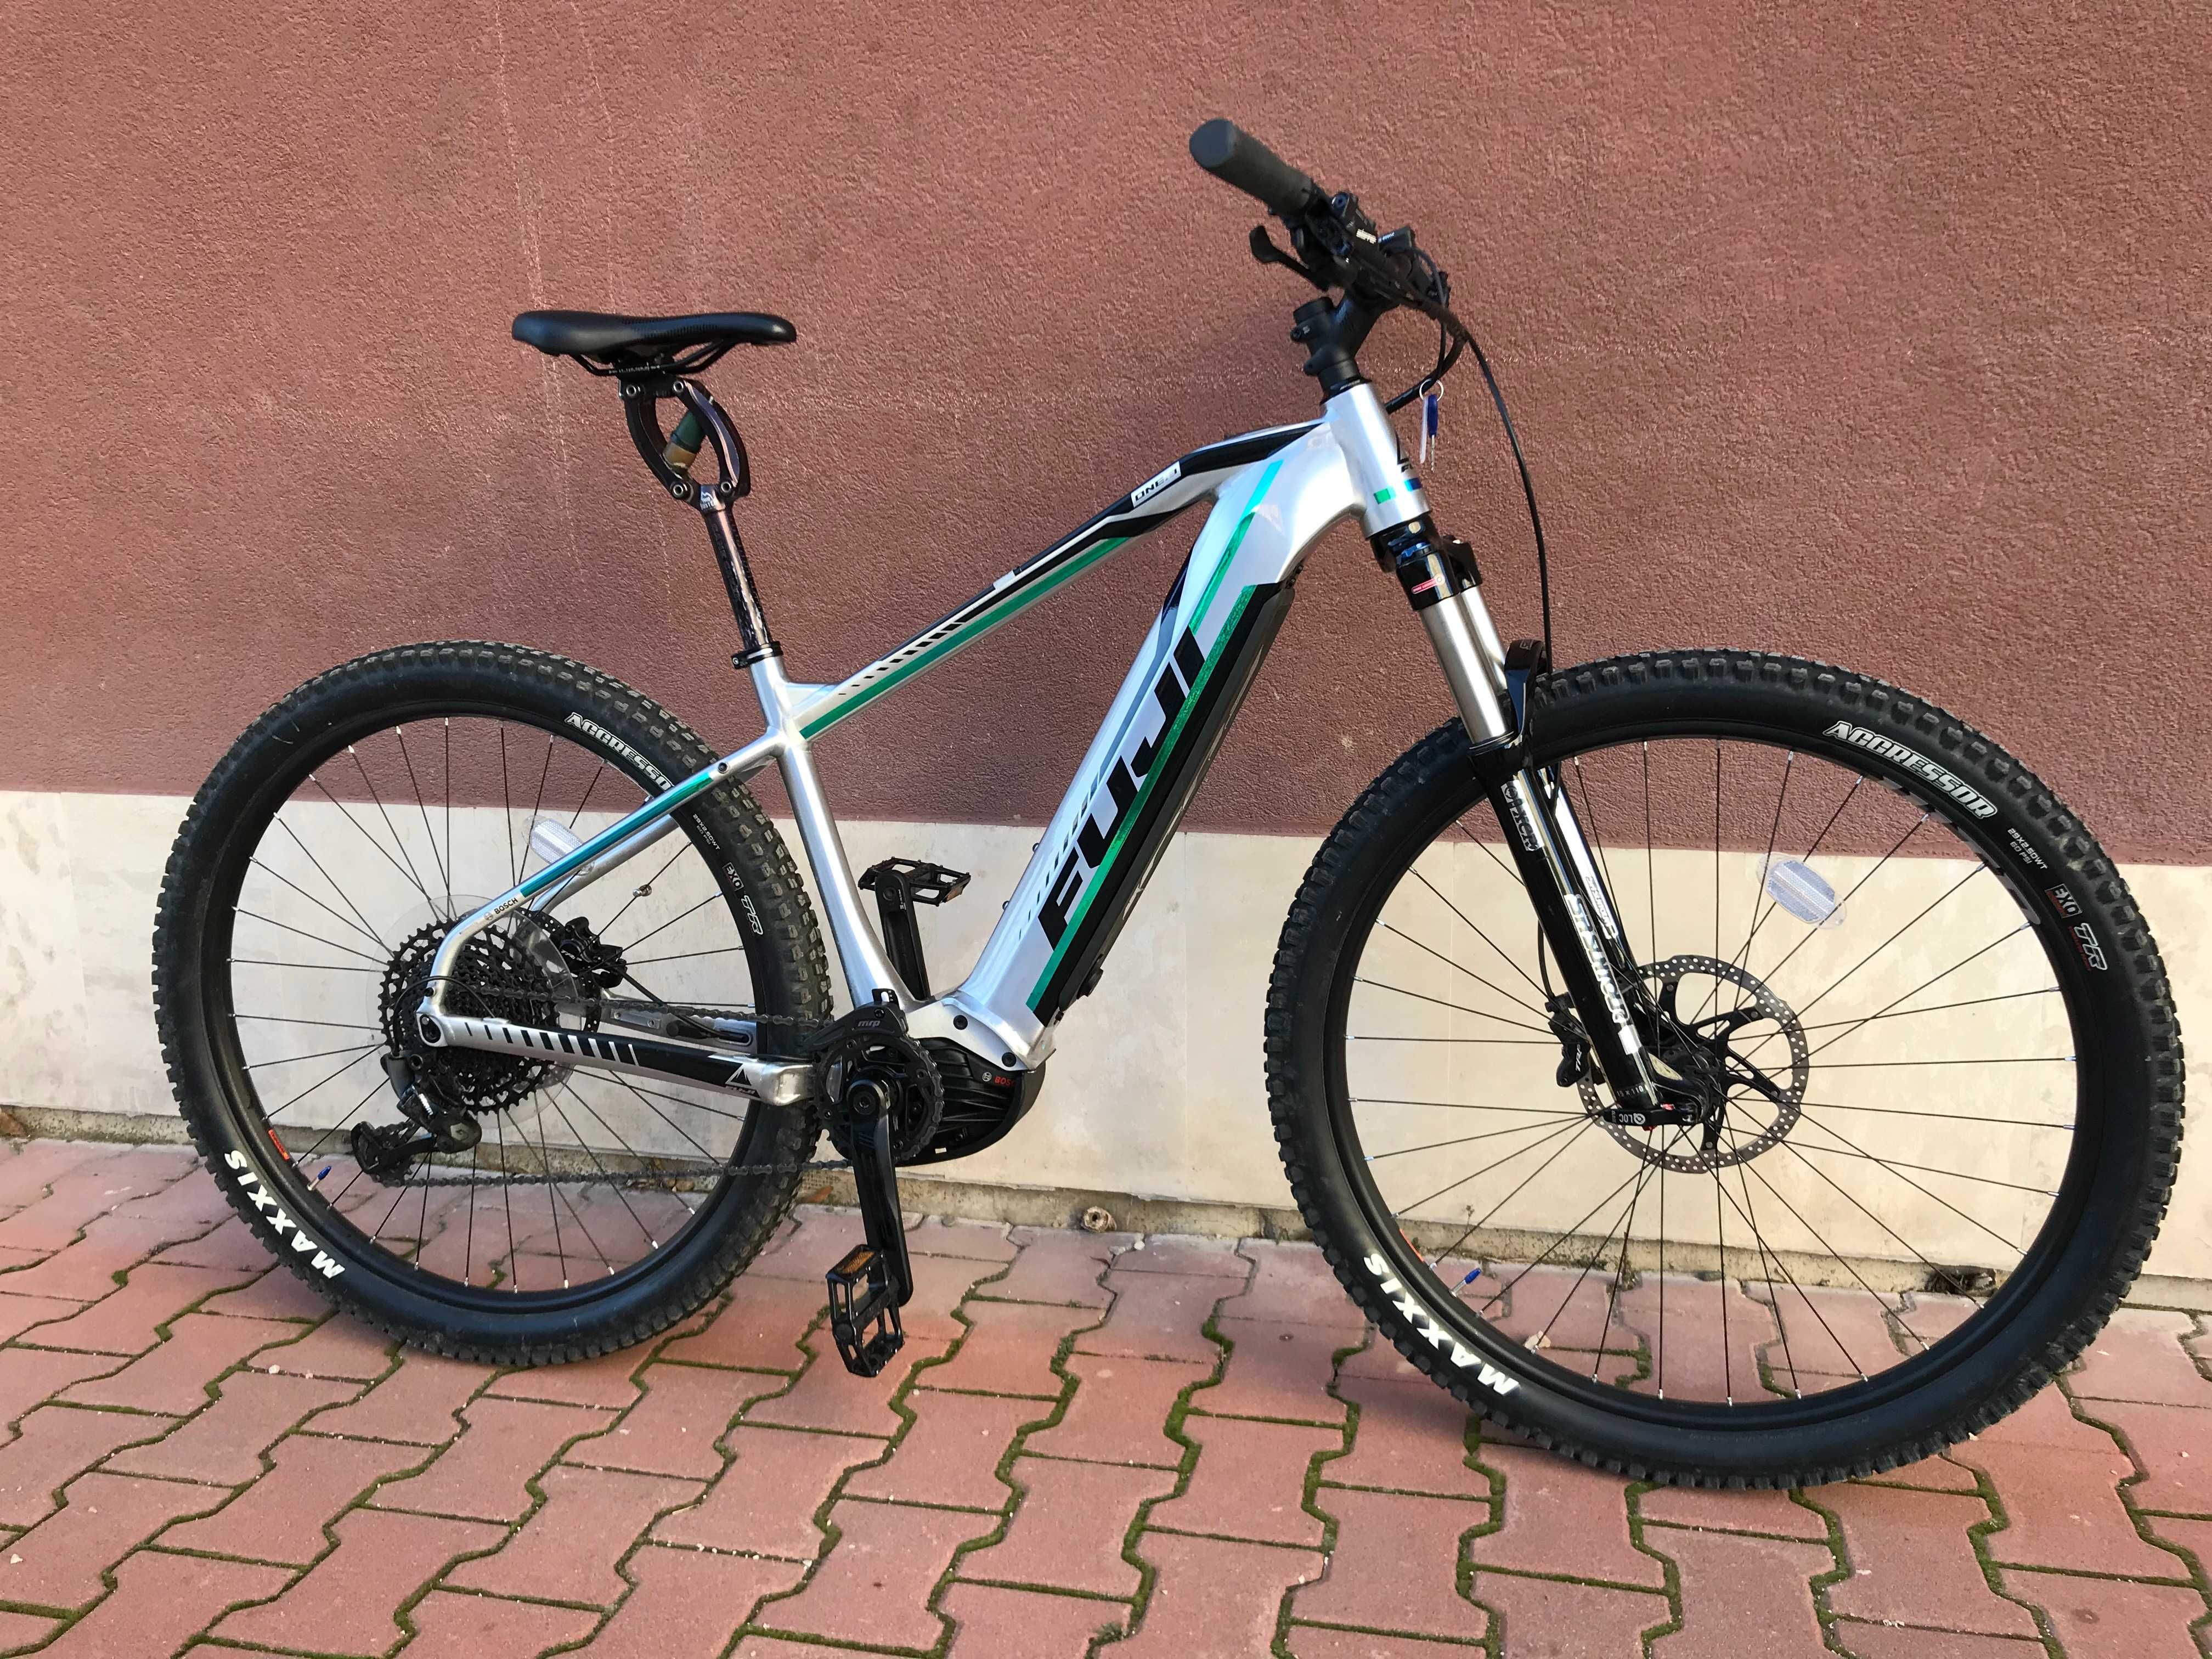 Ел велосипед FUJI AMBIENT EVO 29 / 17"- М size/12s/2020 Bosch gen 4